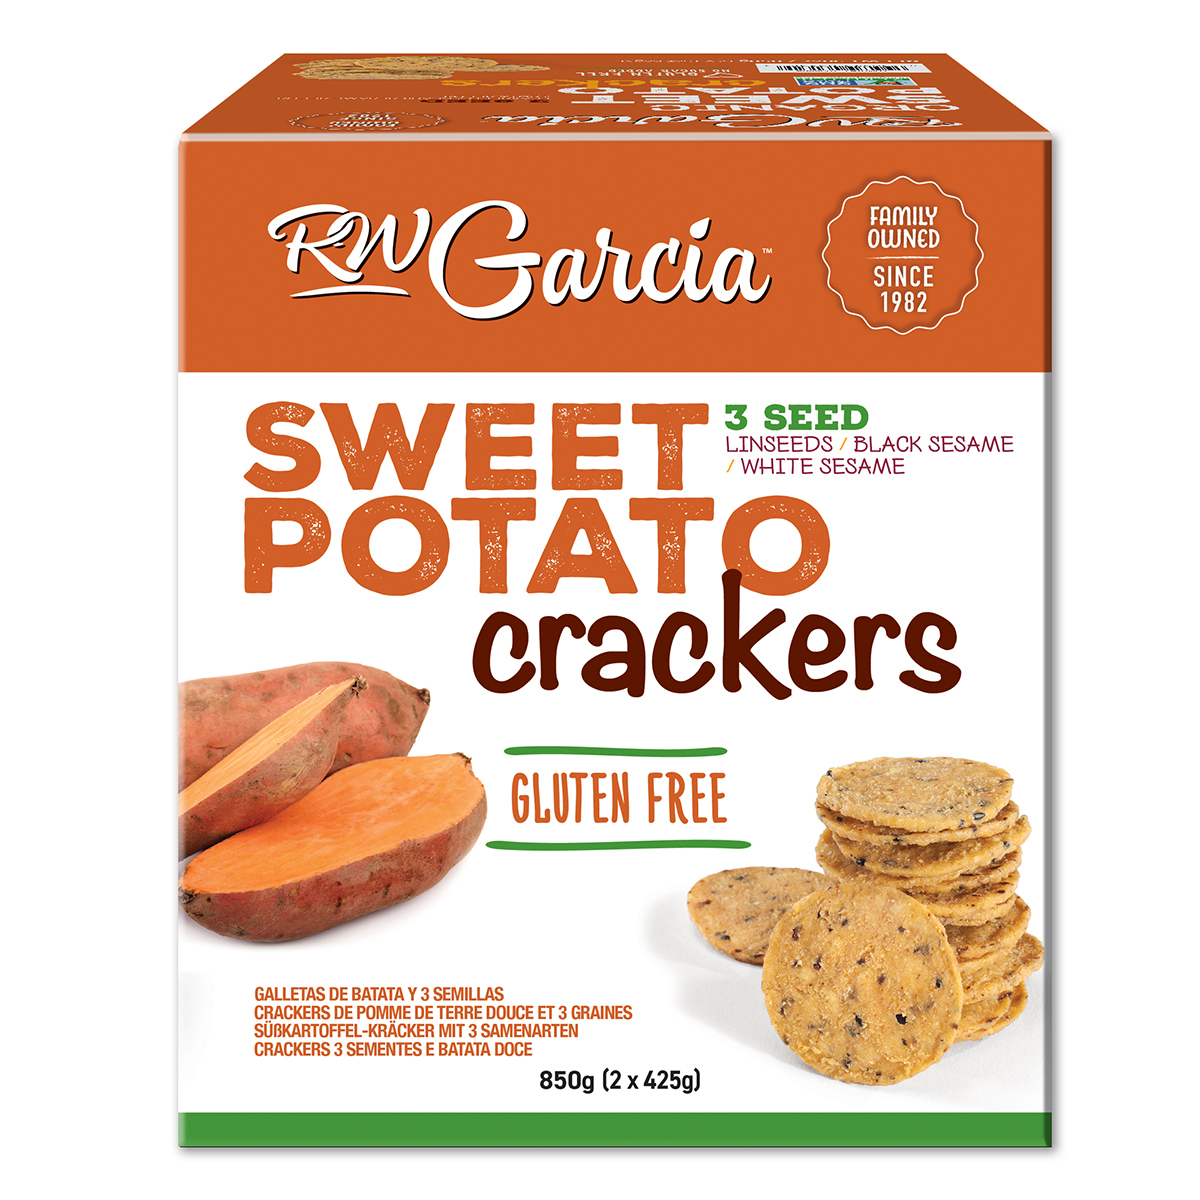 RW Garcia 3 Seed Sweet Potato Crackers, 850g Front of Box